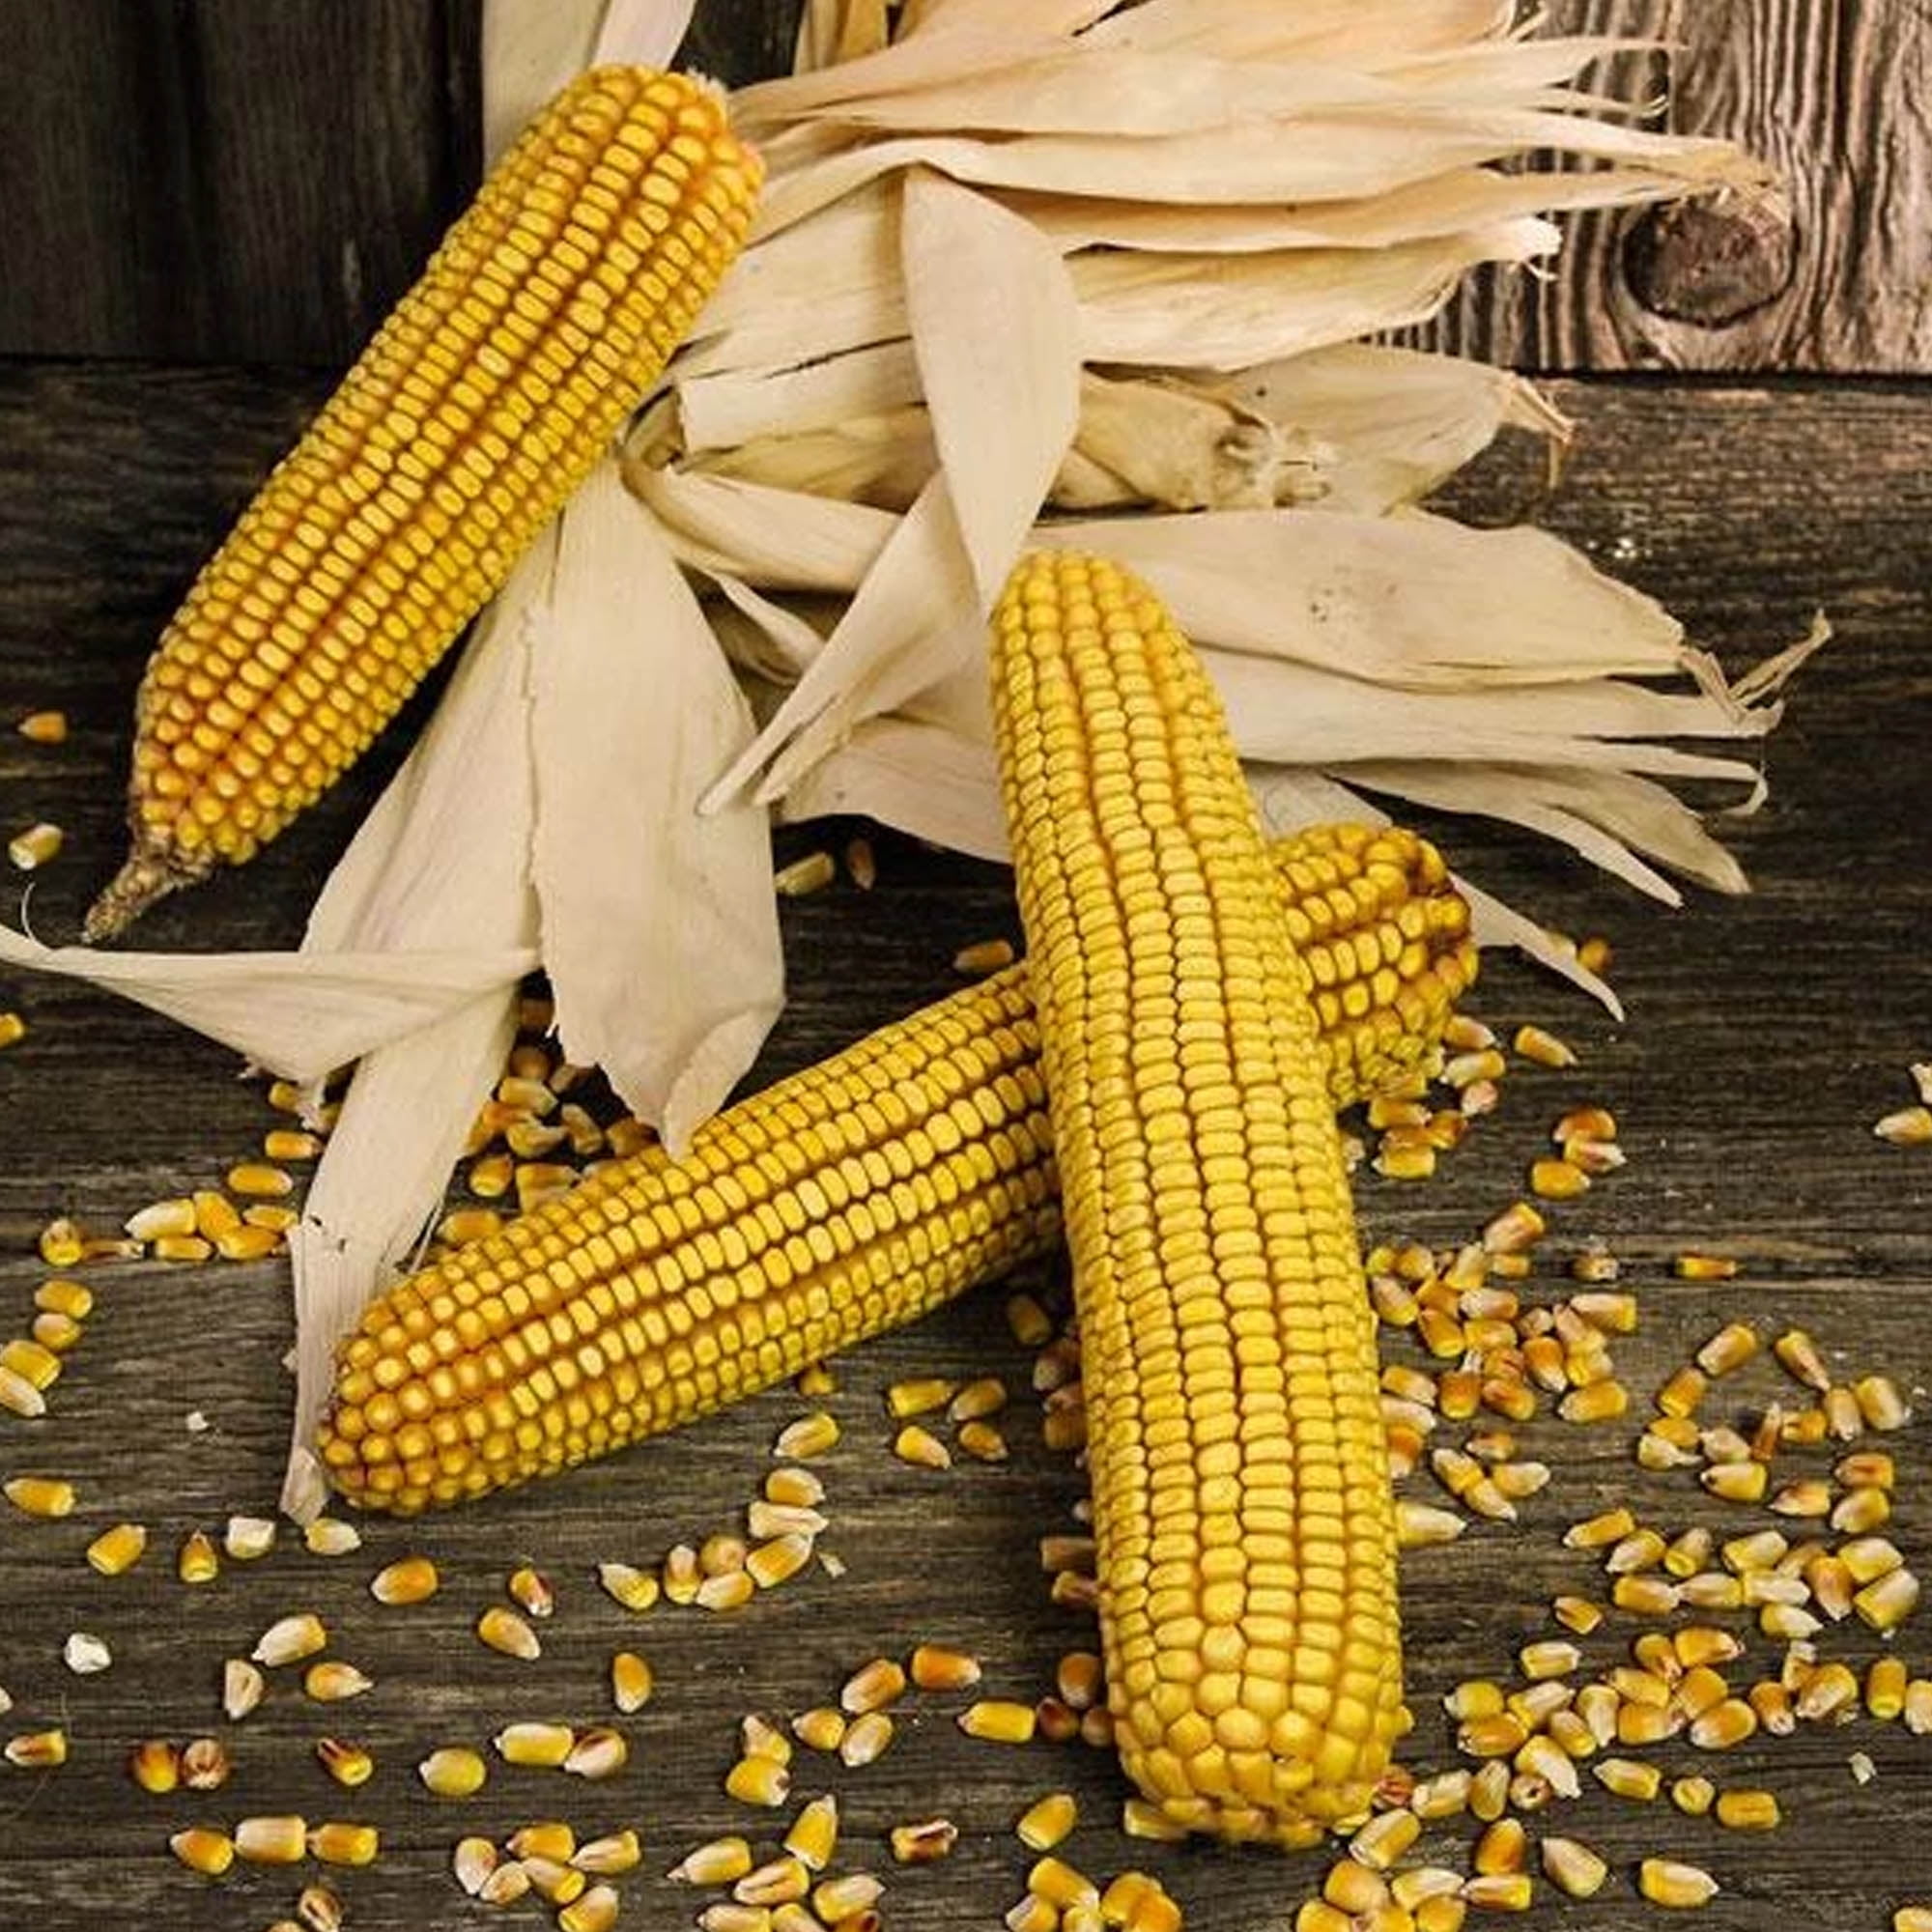 100 Sweet Corn Maize Seeds Fruit Organic Healthy Food Home Garden Rare Heirloom 